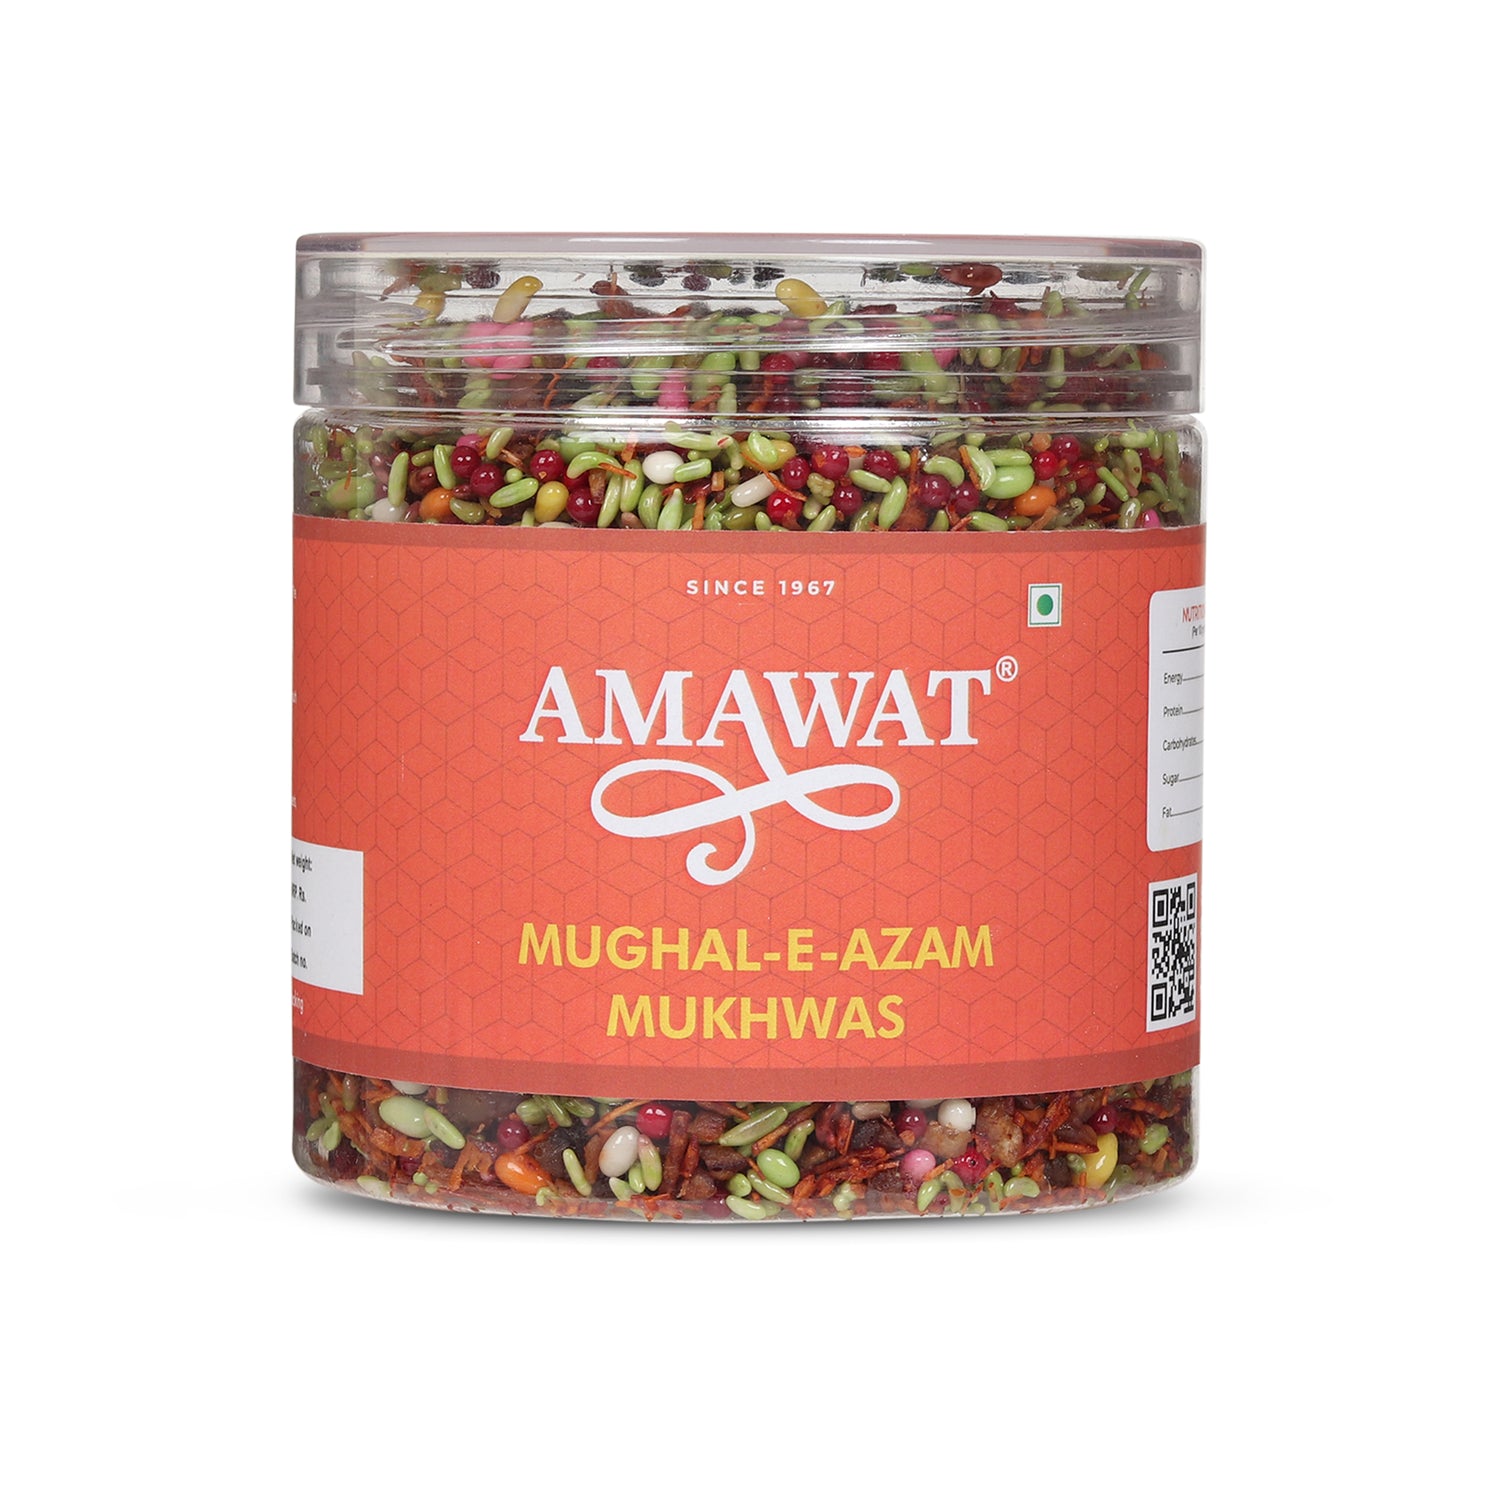 Buy mouth freshener mukhwas from amawat